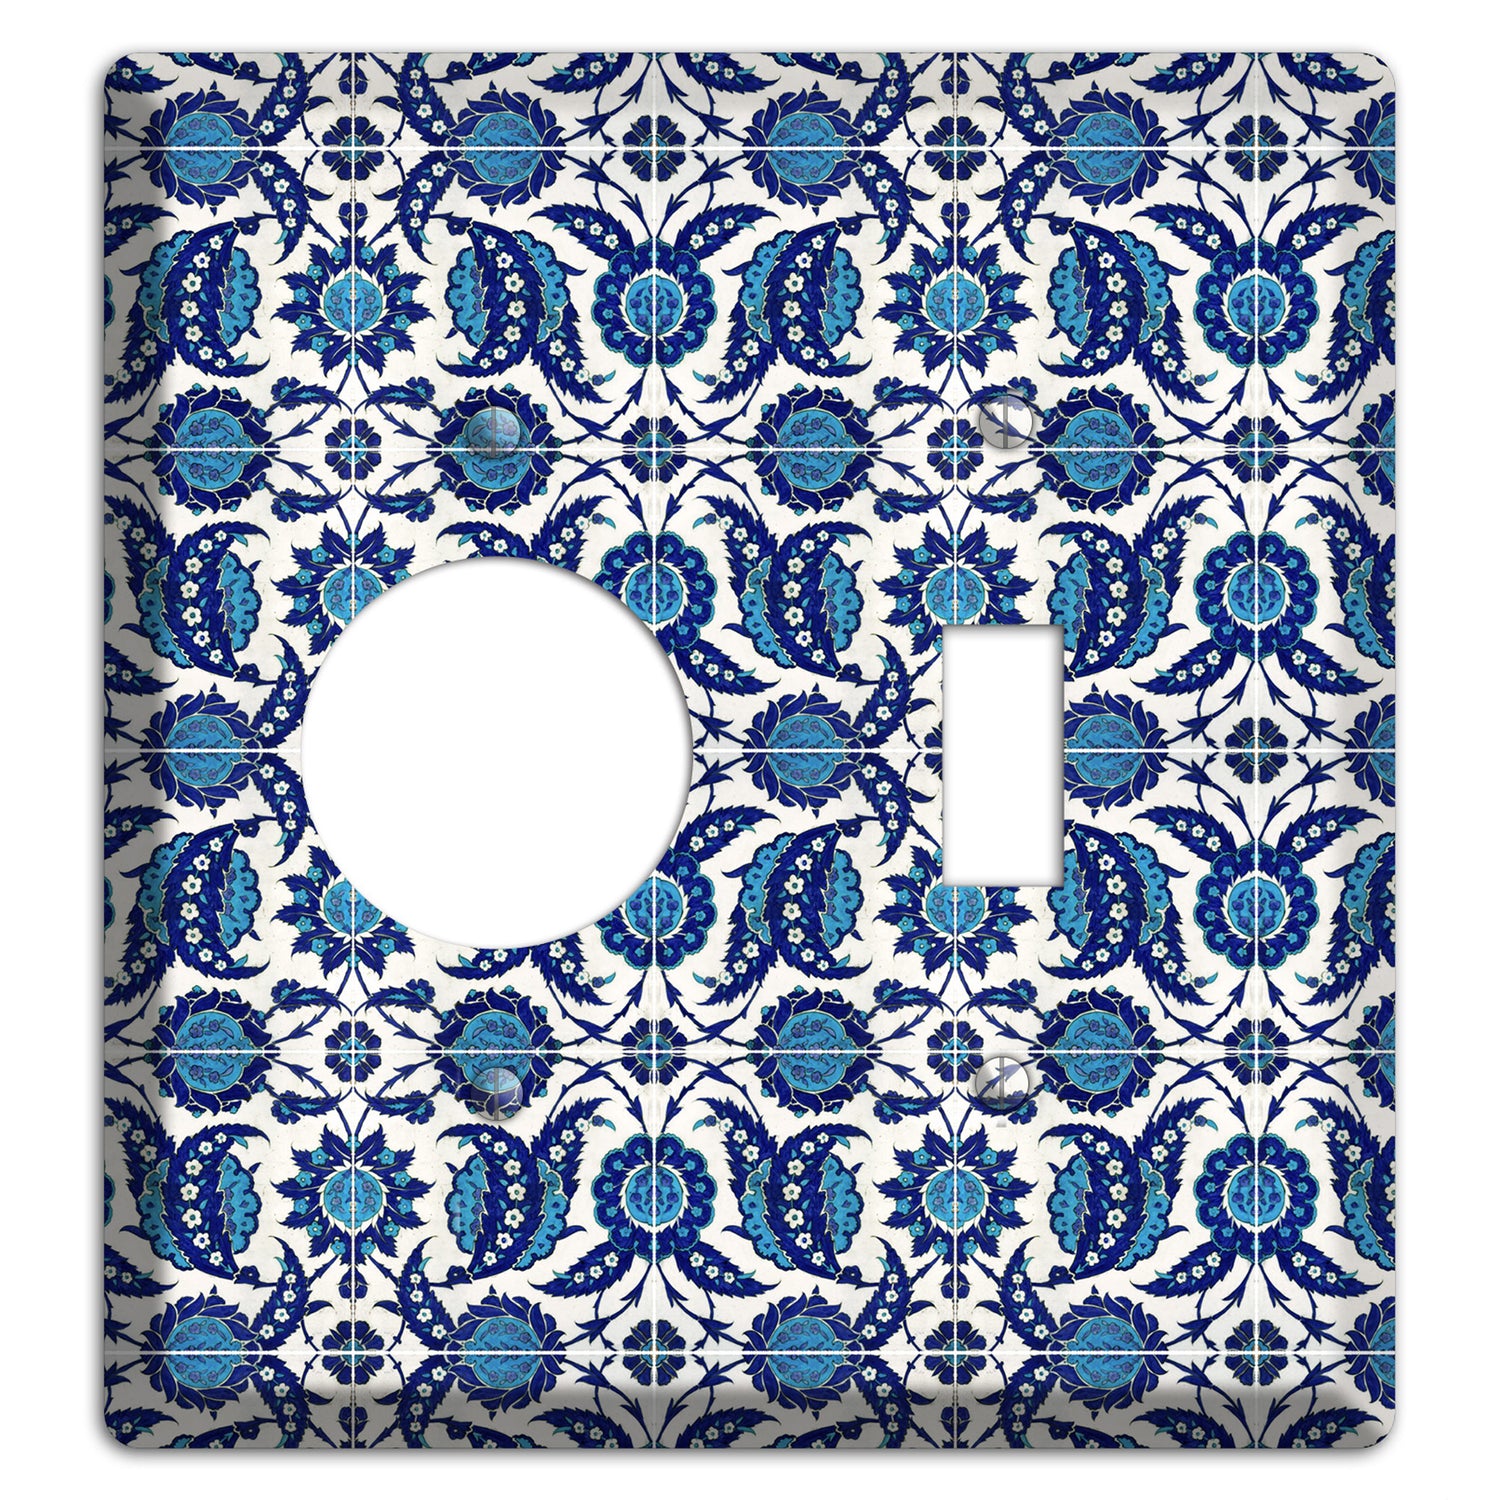 Ornate Paisley Tile Receptacle / Toggle Wallplate